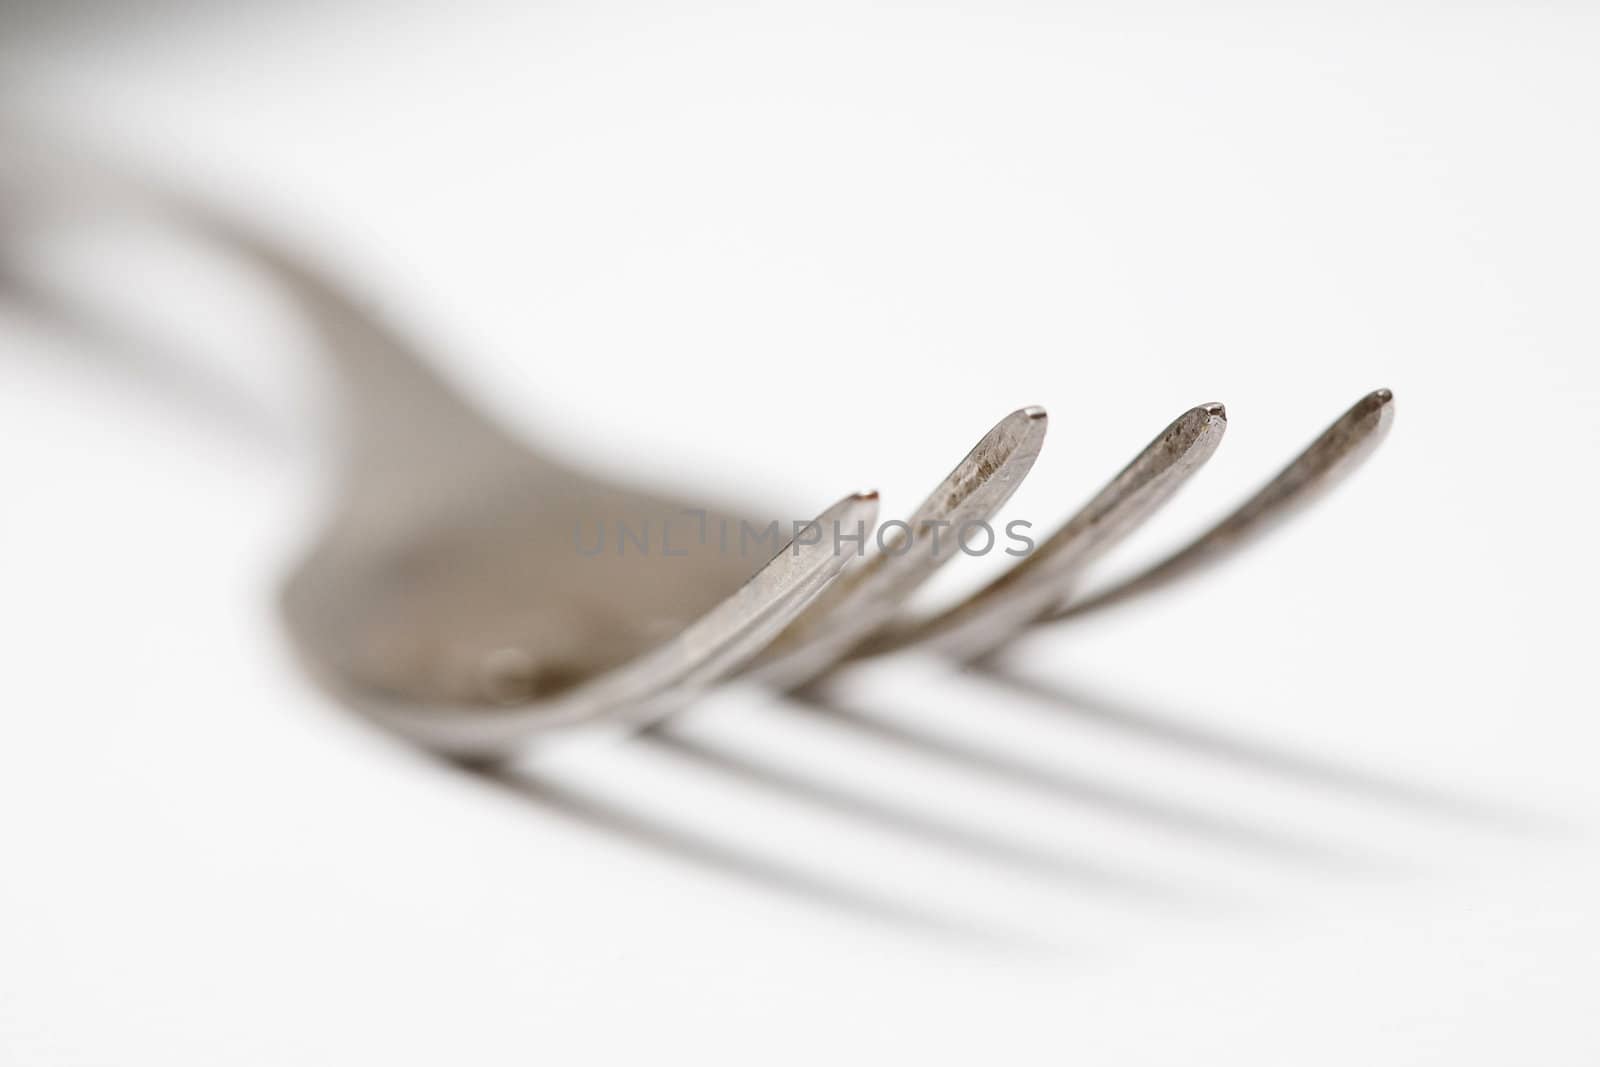 Big steel fork by velkol